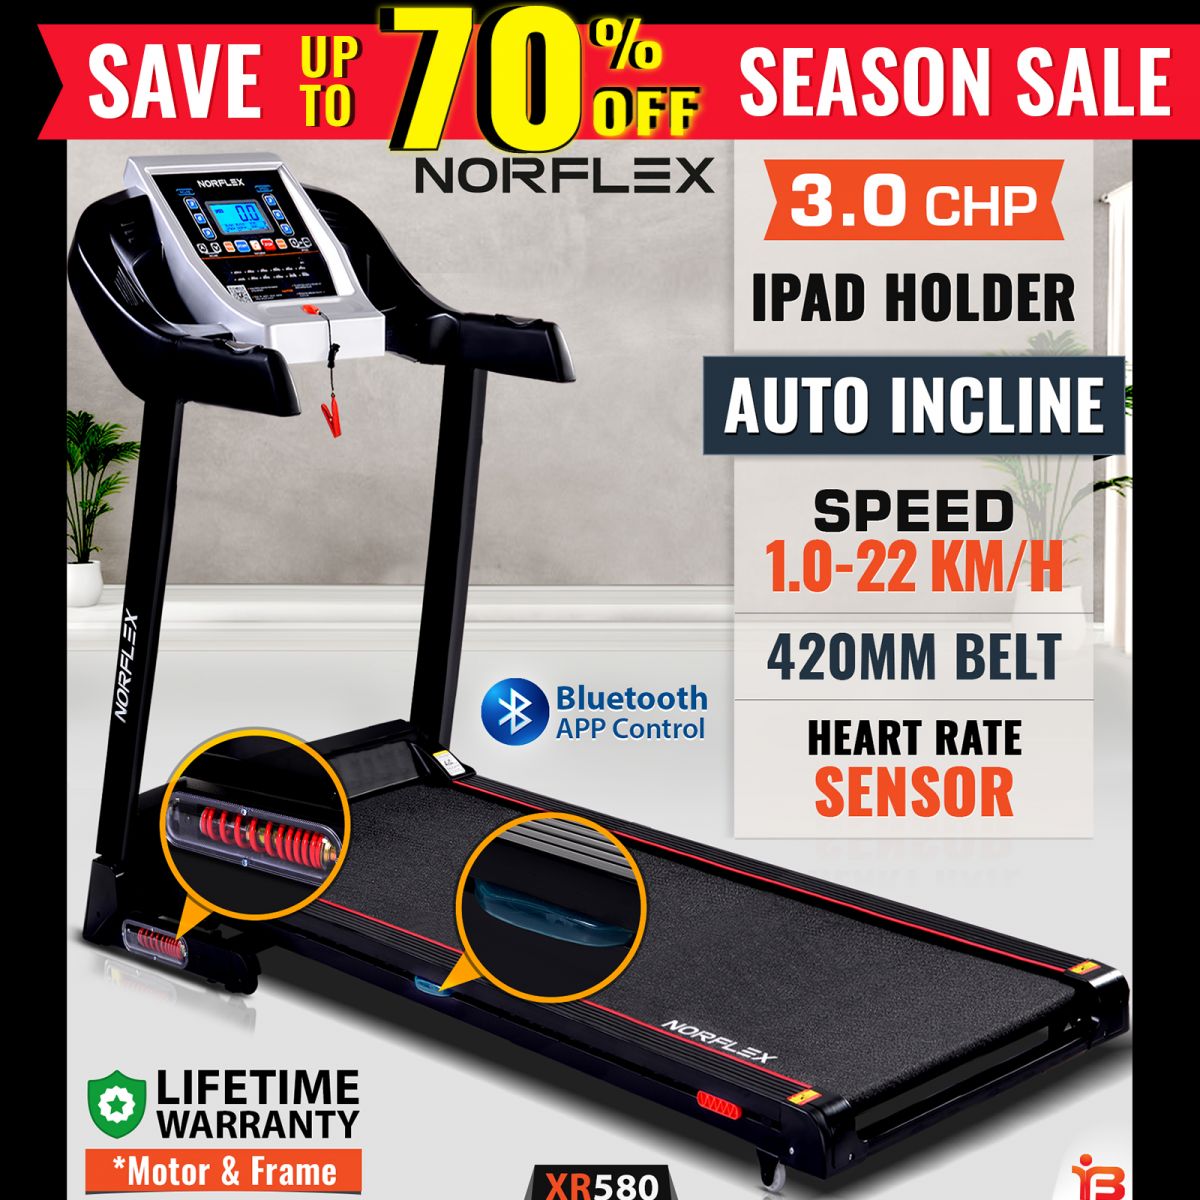 Norflex XR580 3.0 CHP Electric Incline Treadmill